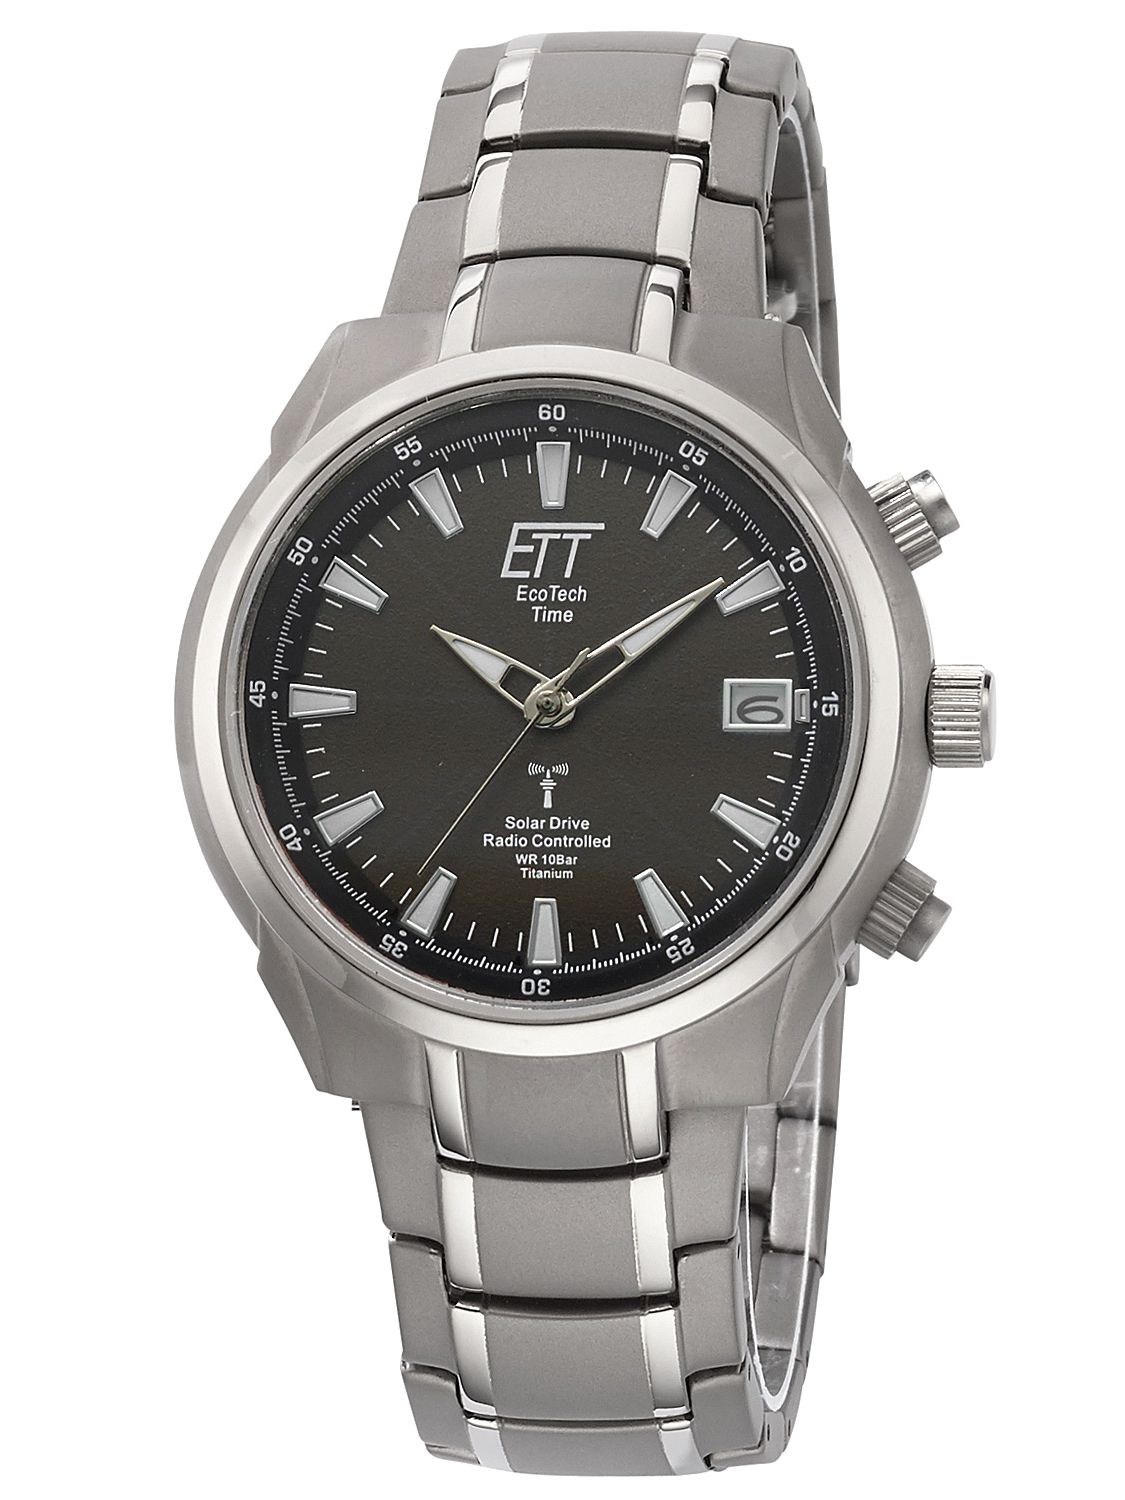 Tech Aquanaut ETT Funk Drive Solar II EGT-11340-61M Eco Herren-Armbanduhr • Time uhrcenter